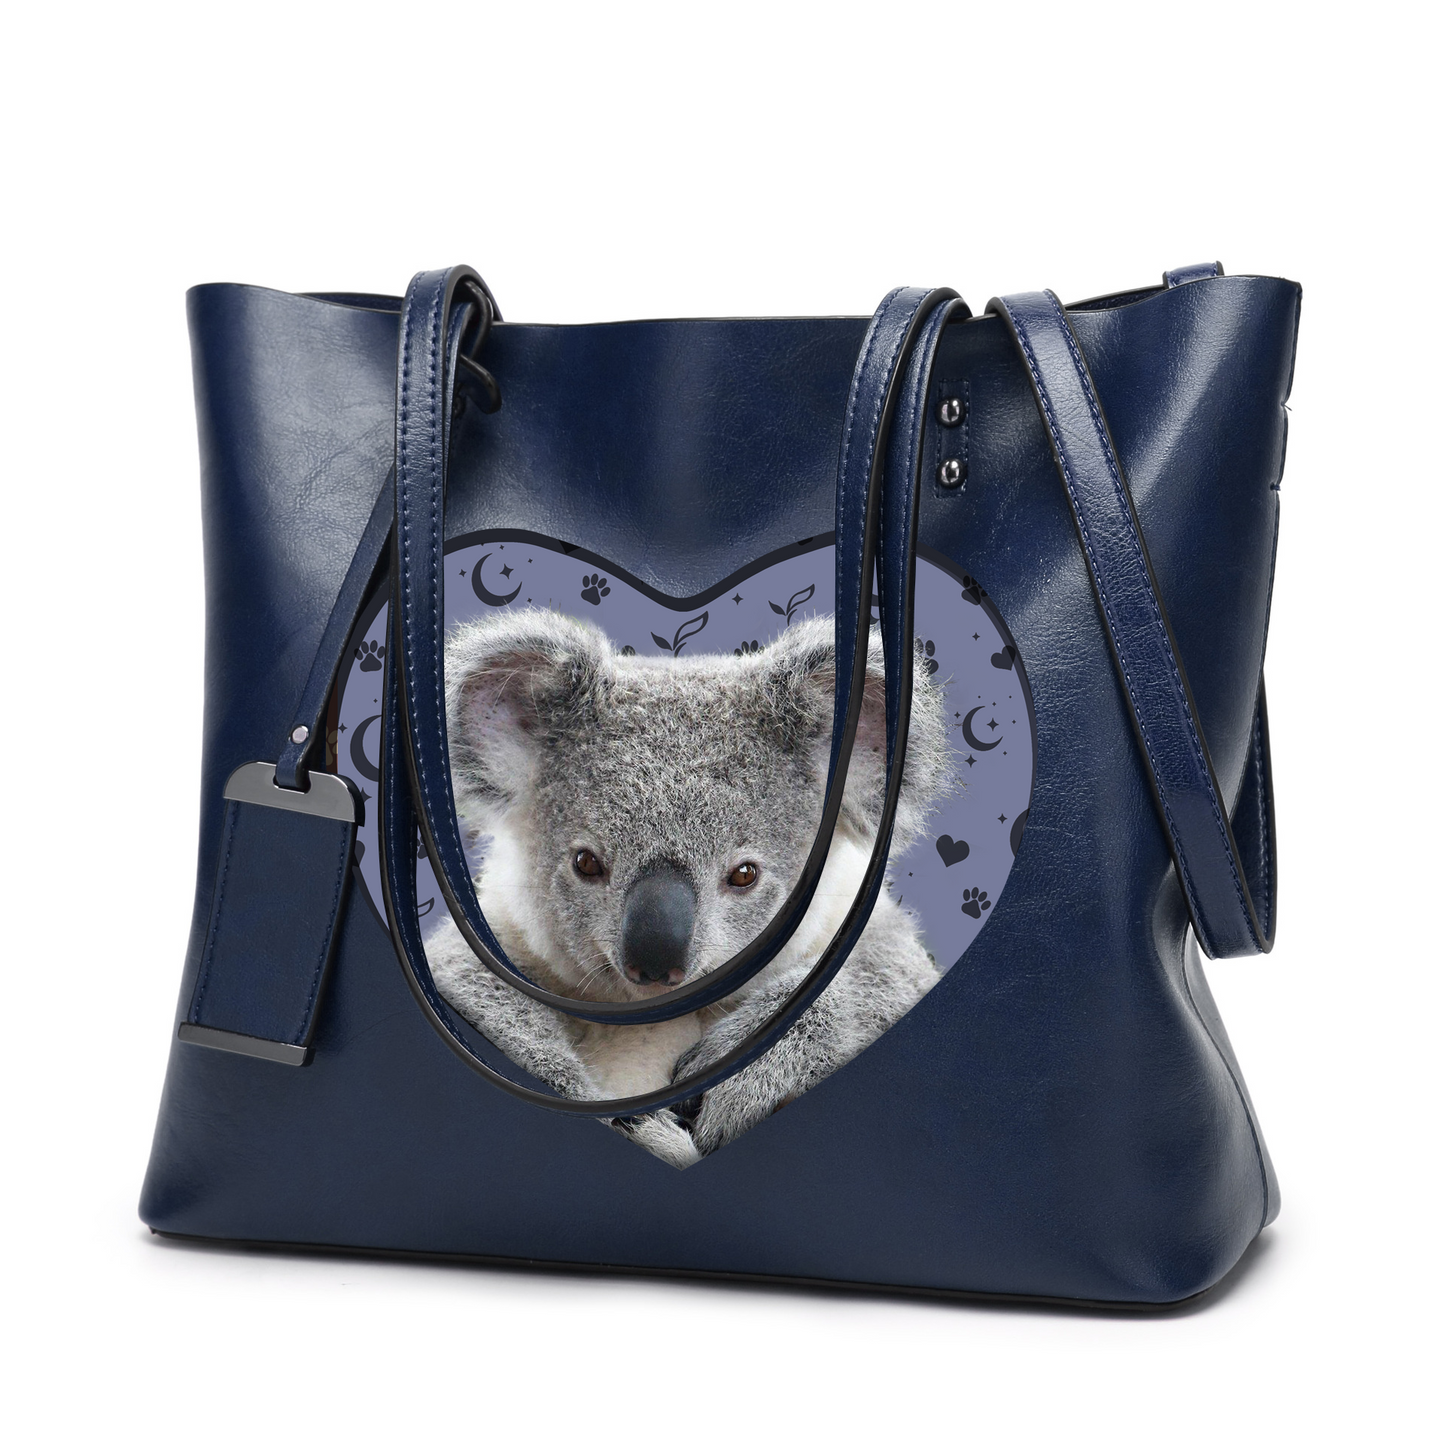 I Know I'm Cute - Koala Glamour Handbag V1